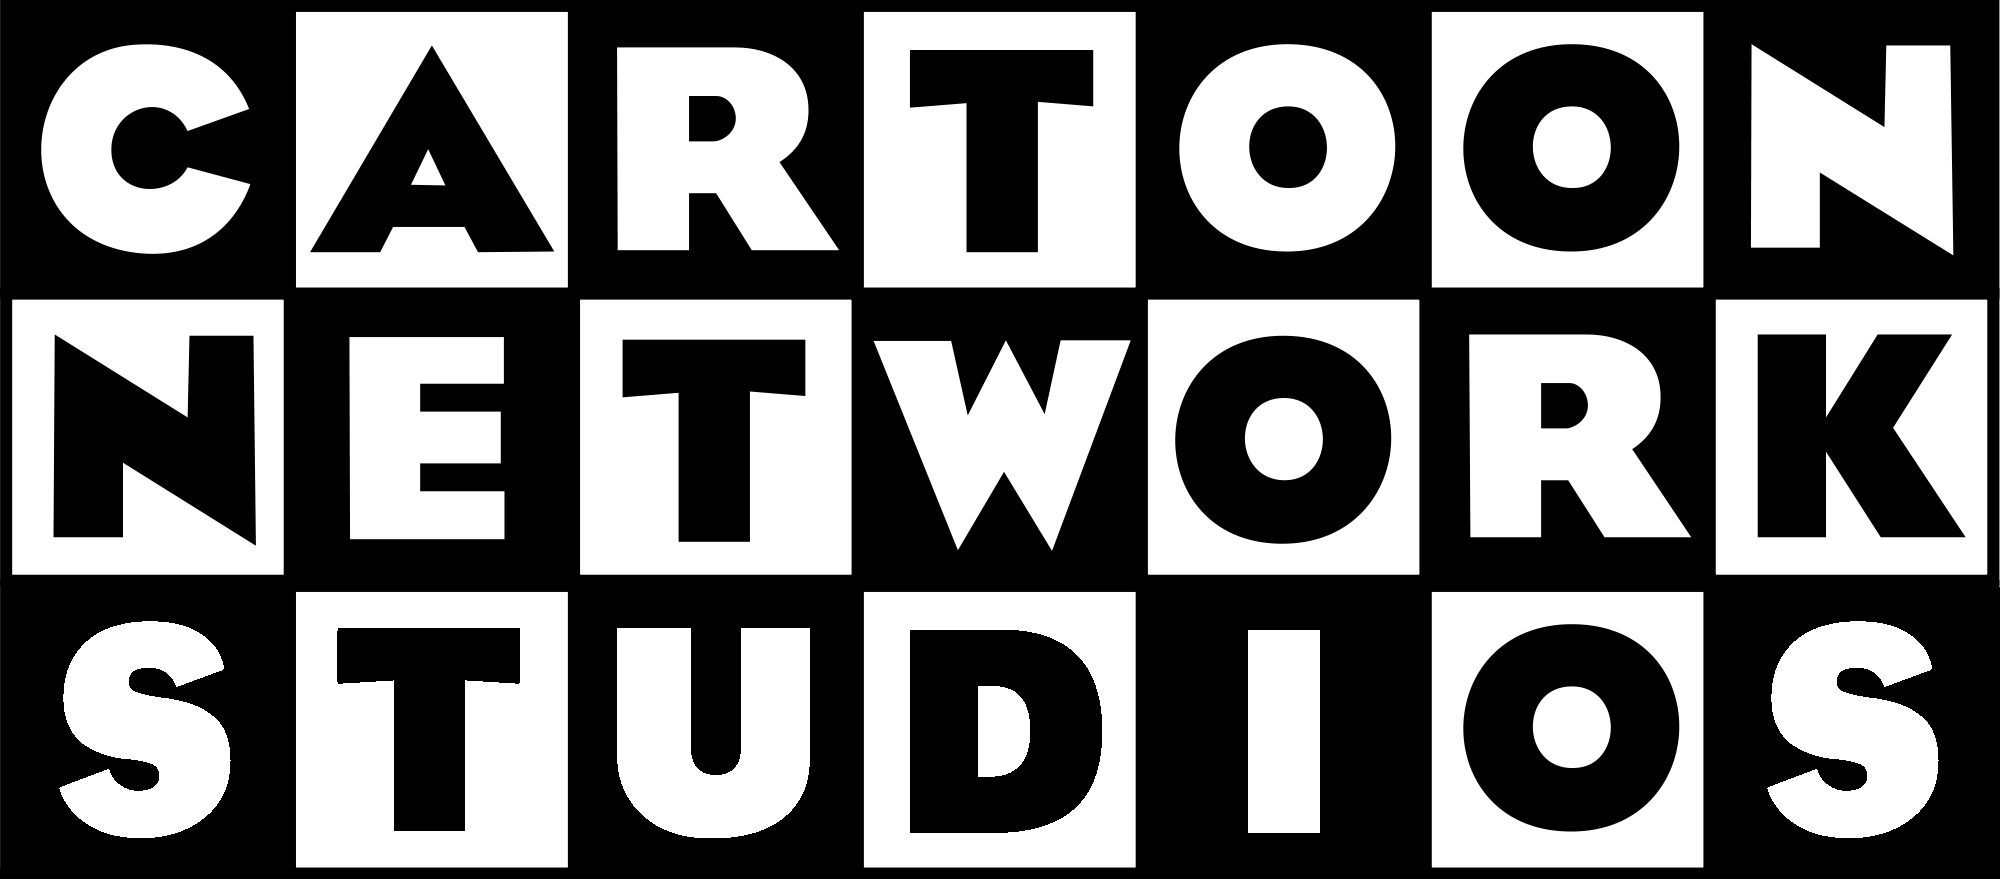 Cartoon Network Studios Logo - File:Cartoon Network Studios 1st logo v2.png - Wikimedia Commons